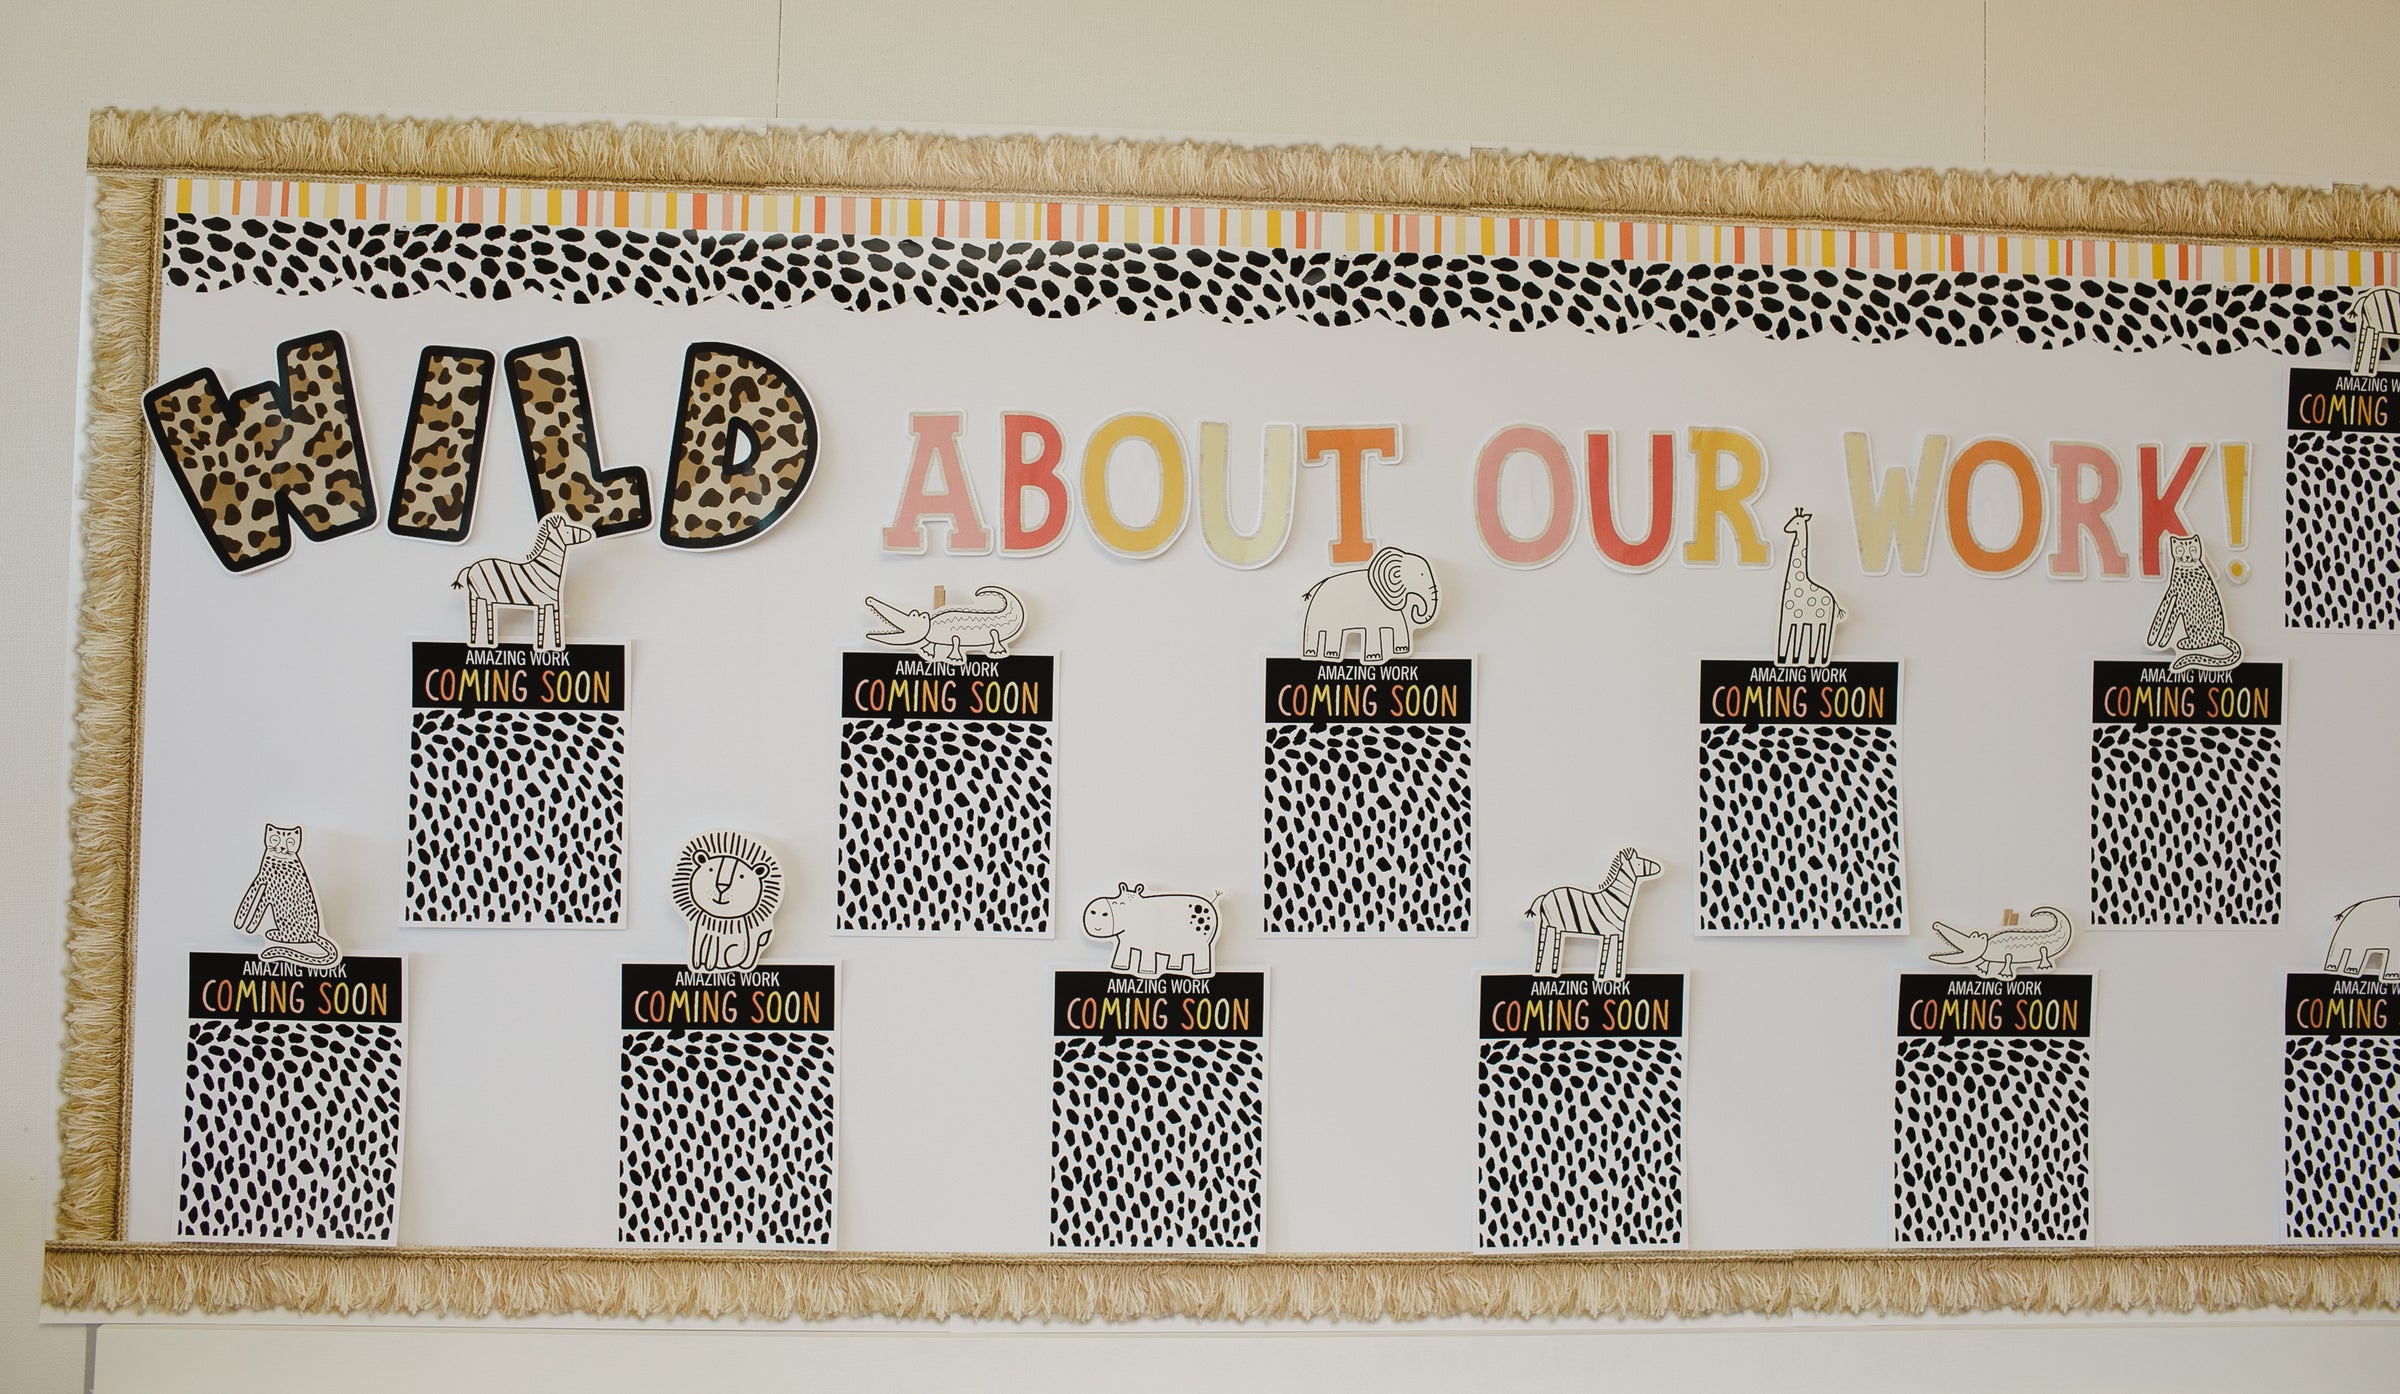  Schoolgirl Style Simply Safari Leopard Print Bulletin Board  Borders, 39 Feet of Scalloped Leopard Dot Classroom Borders for Bulletin  Board, White Board, Cork Board, Desk Decor, and Classroom Decor 